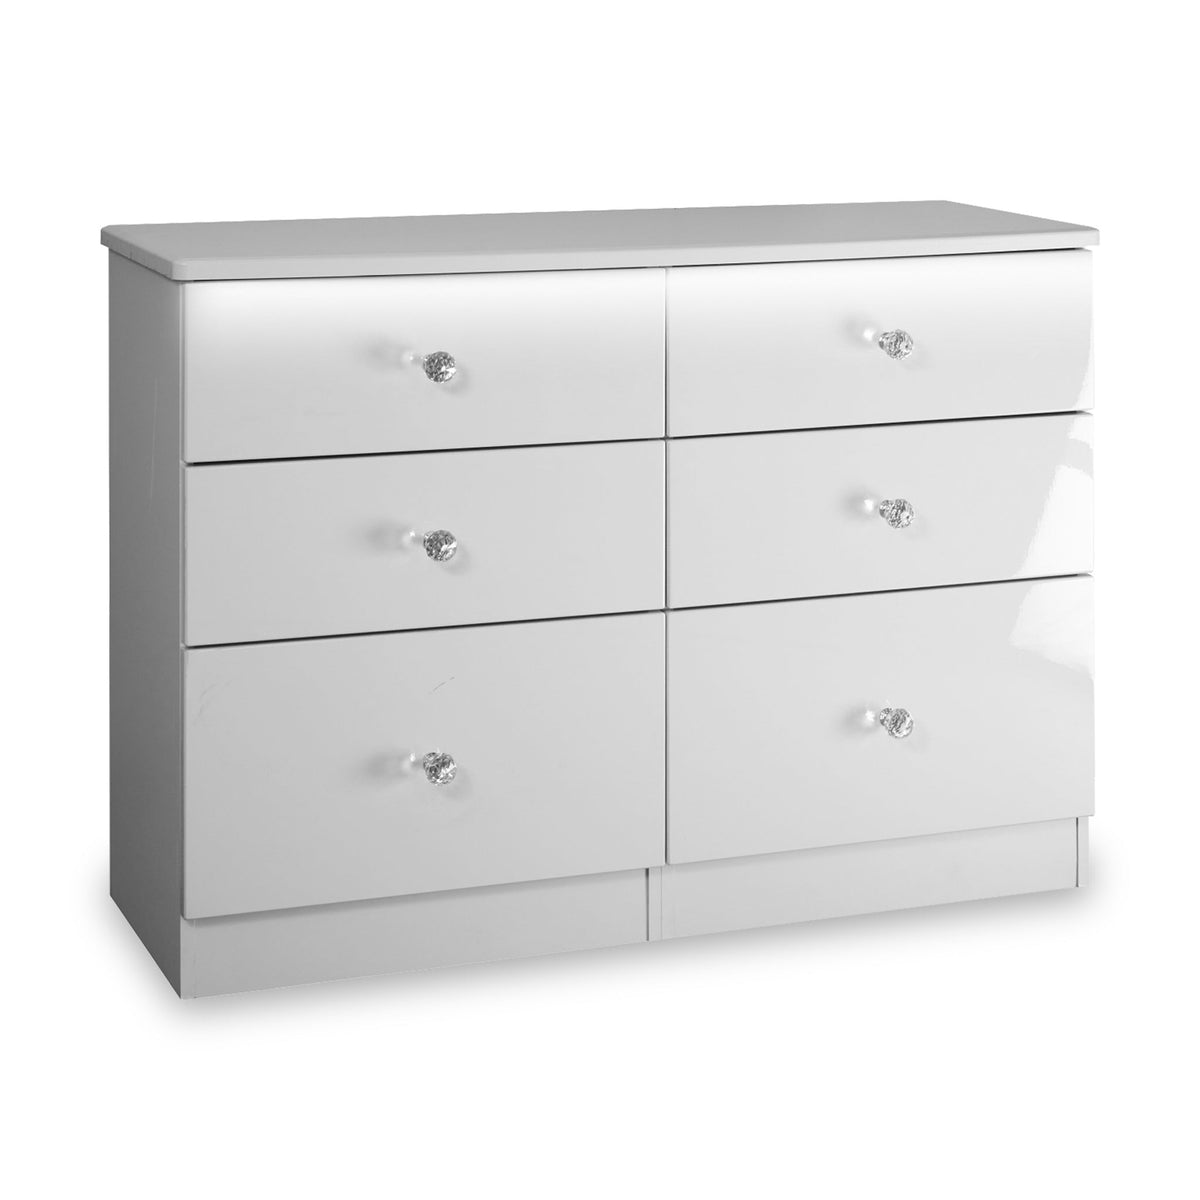 Aria white gloss LED lighting chest of 6 drawers